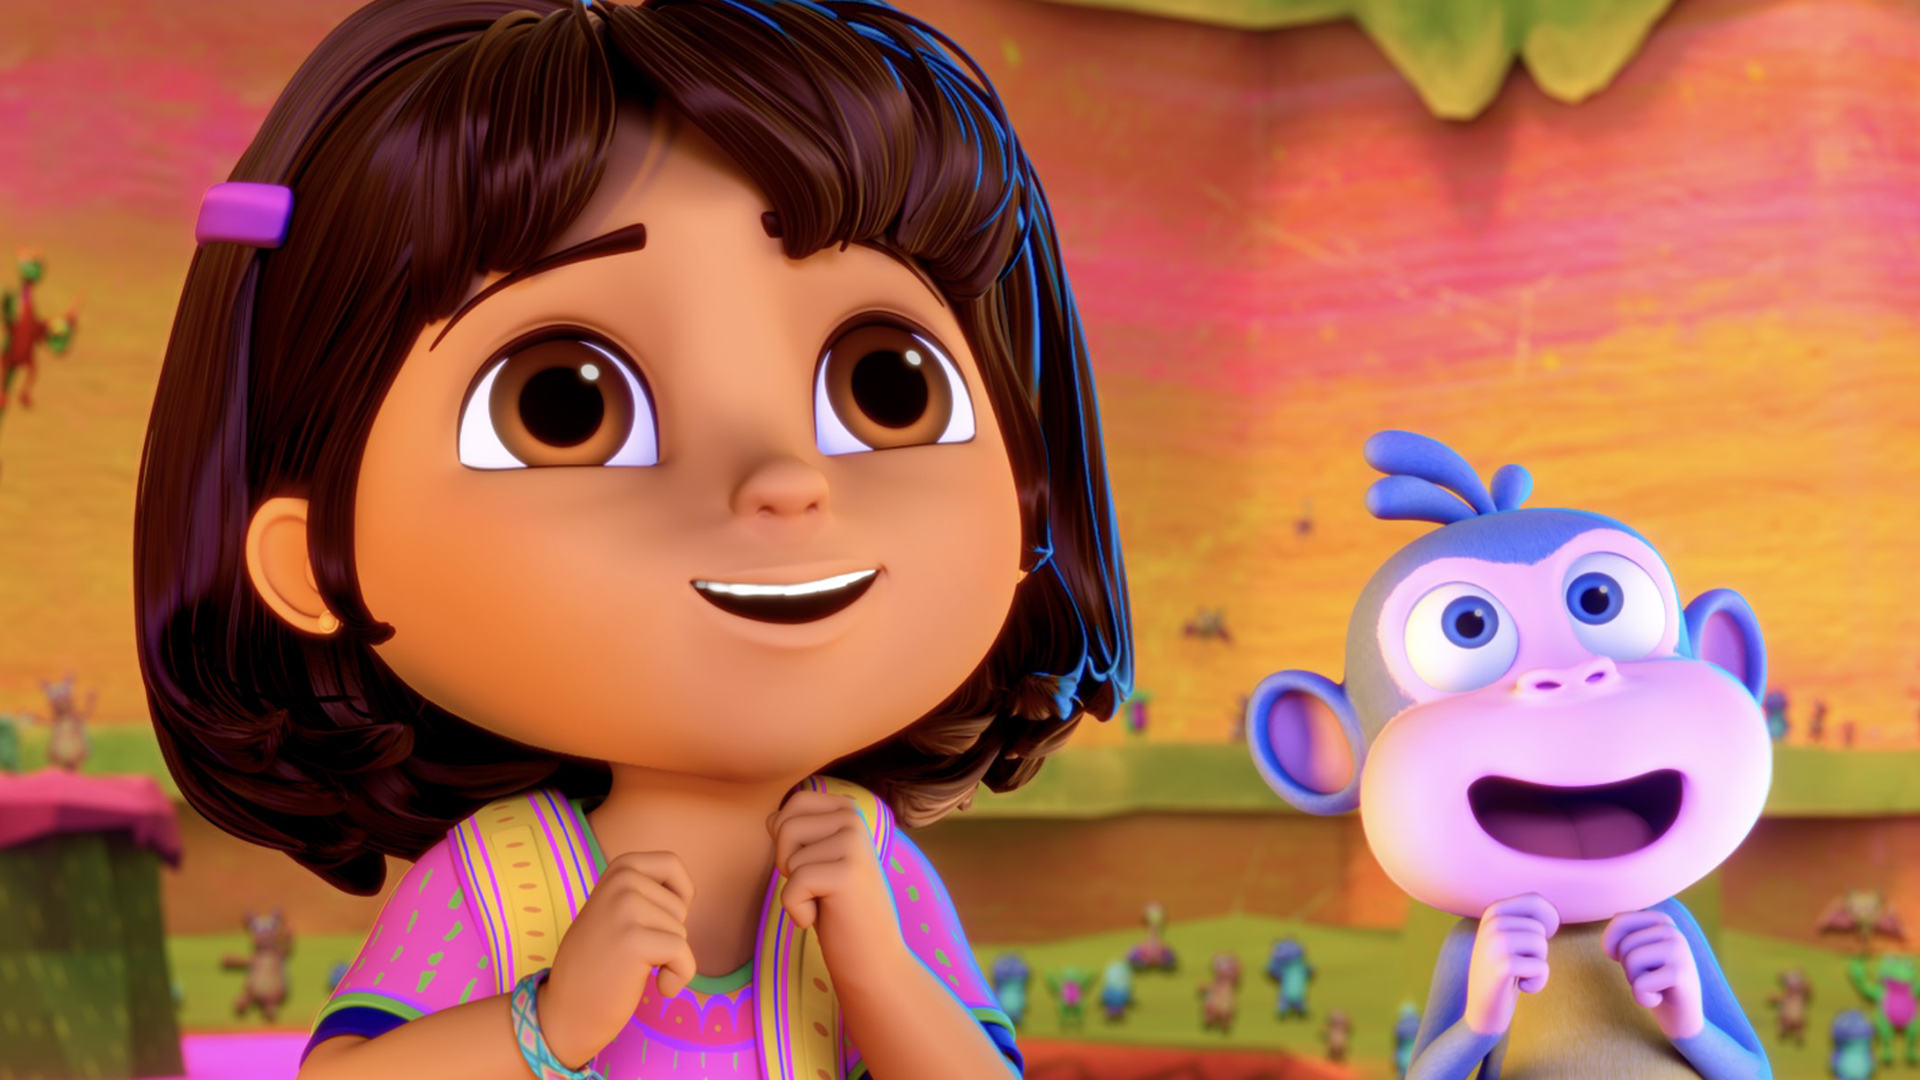 Watch The Trailer For Dora The Explorer's AllNew Theatrical Short Film